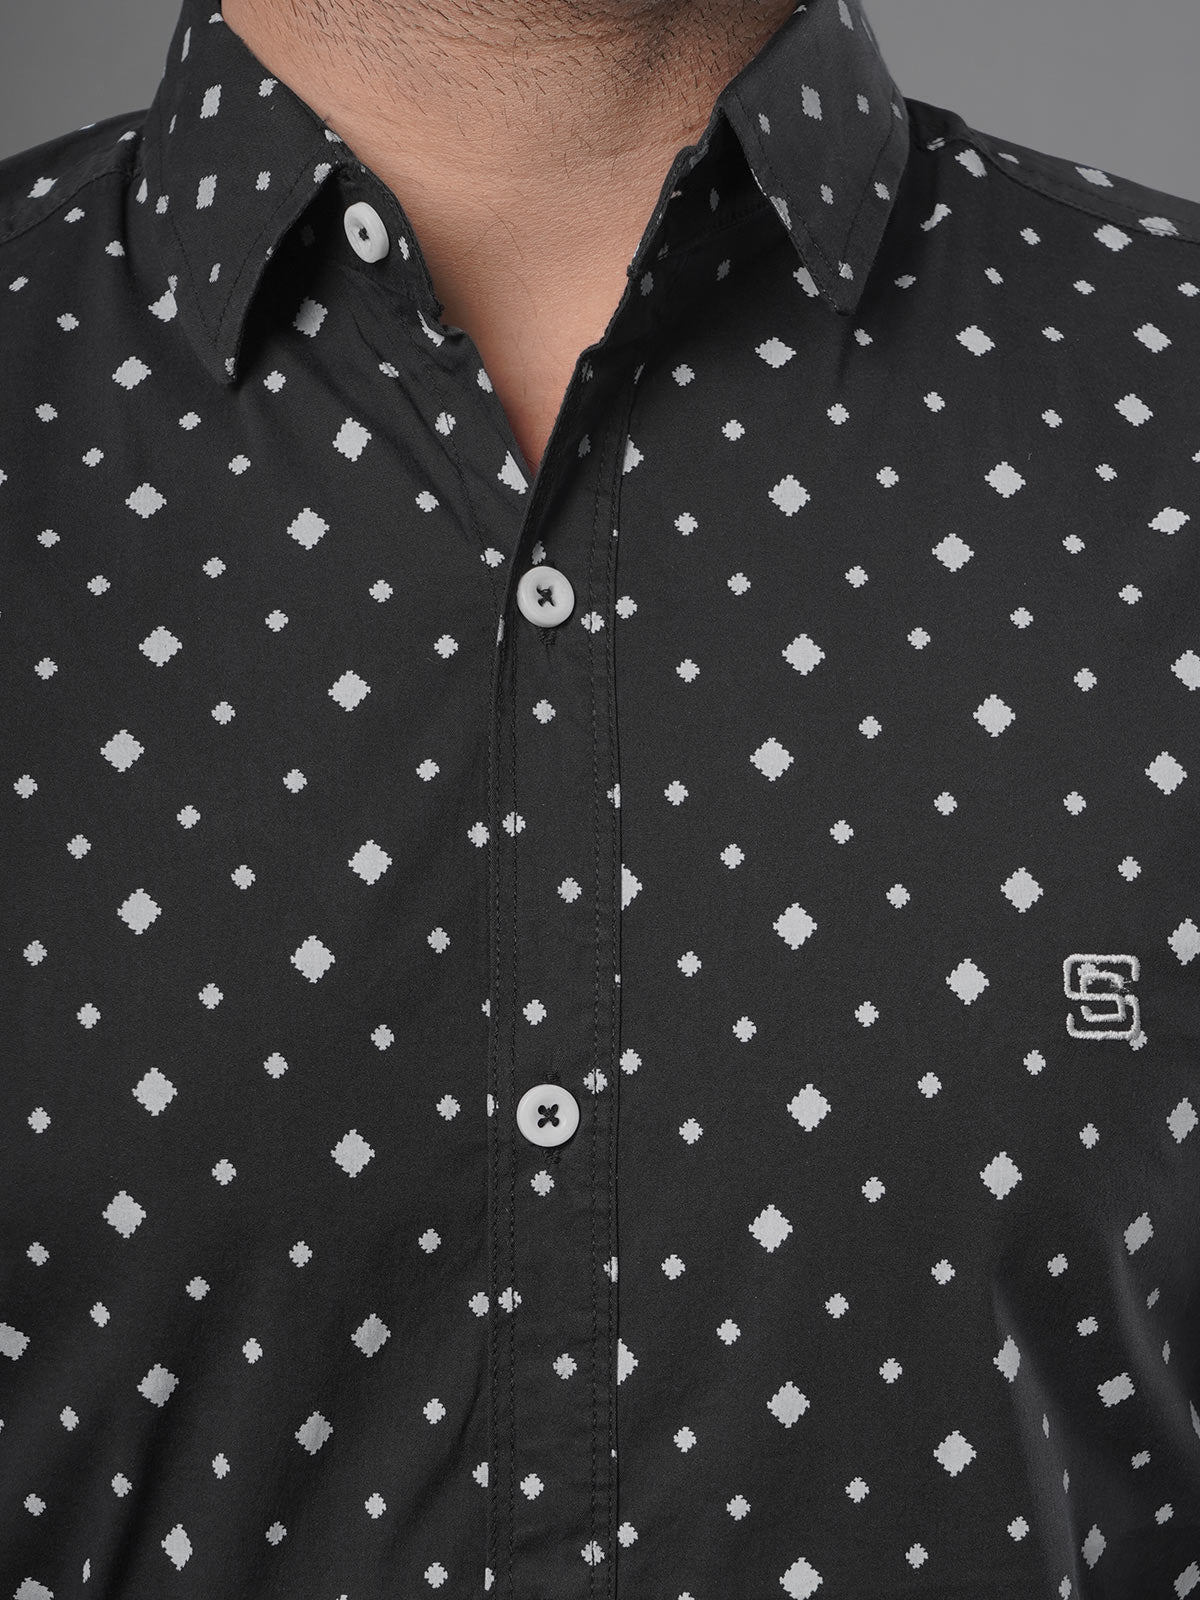 Black & White Printed Casual Shirt (CSP-129)